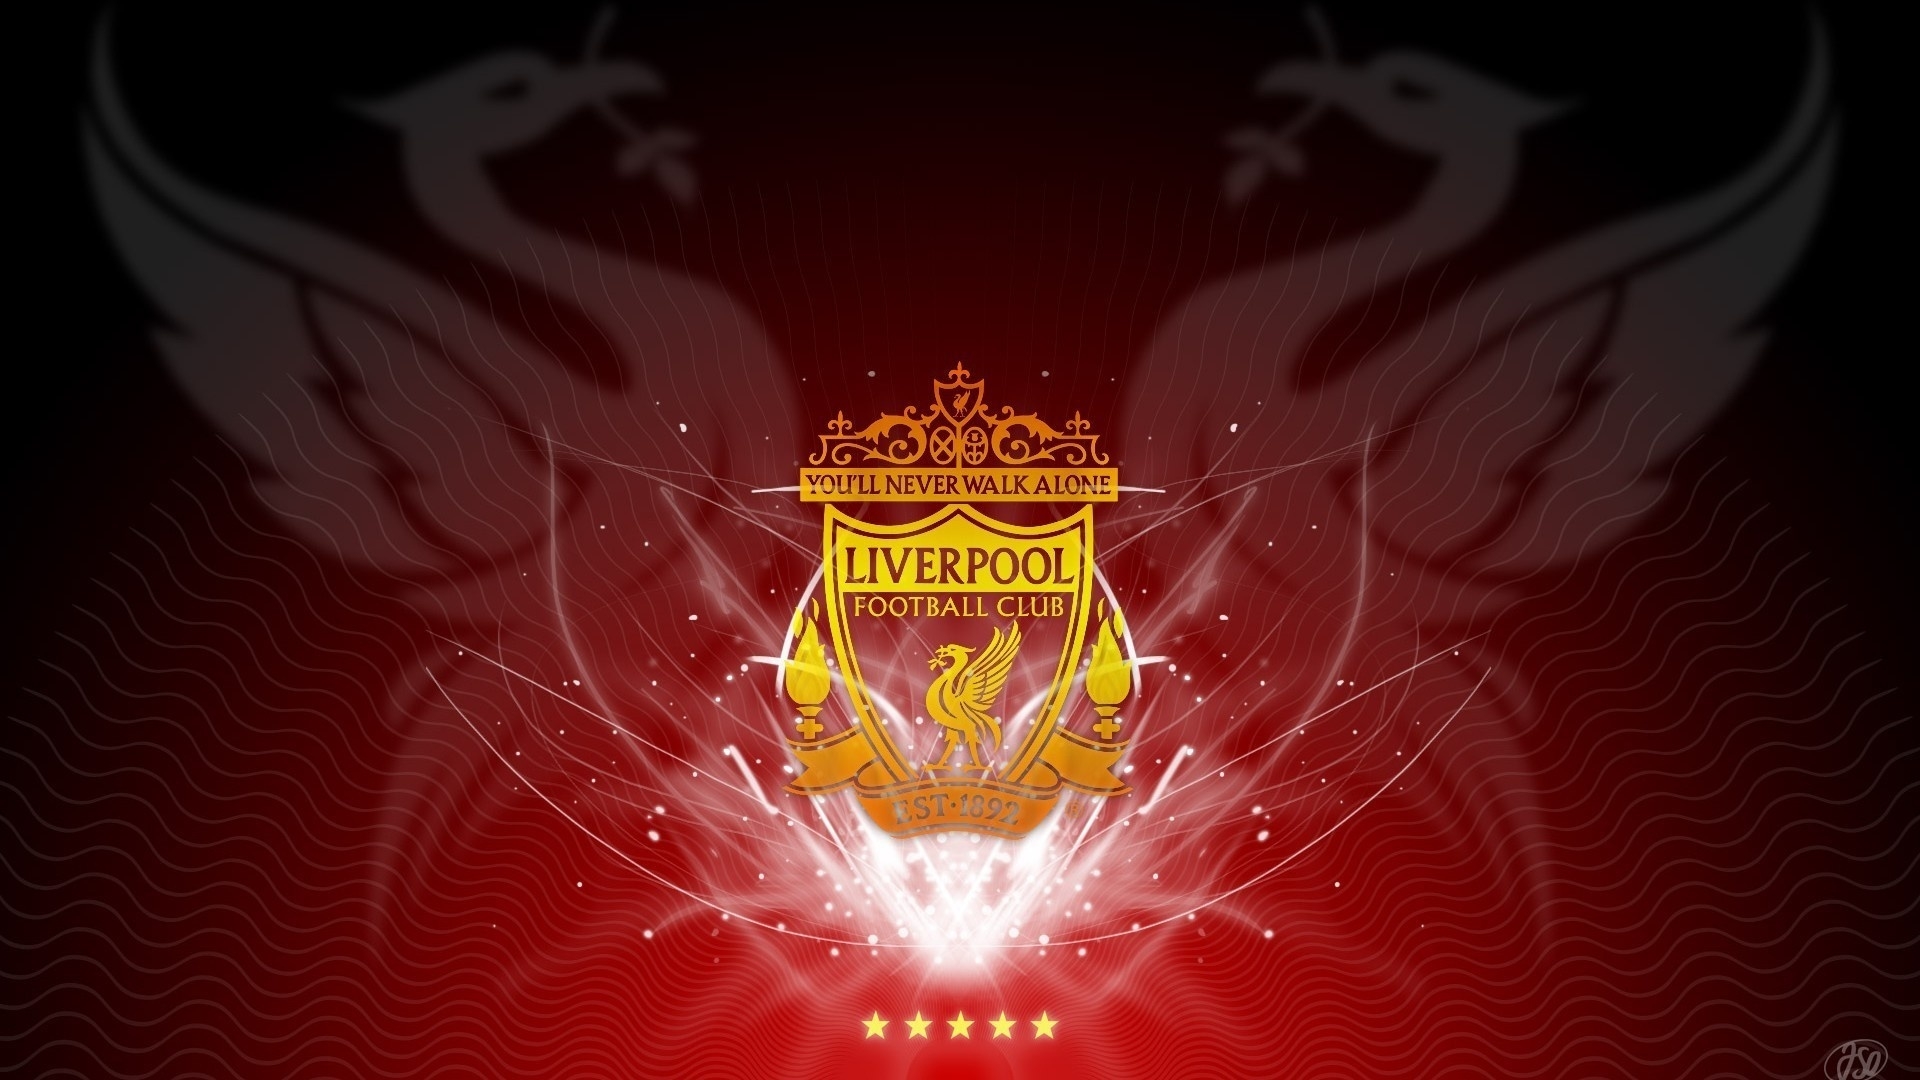 Liverpool Fottball Club